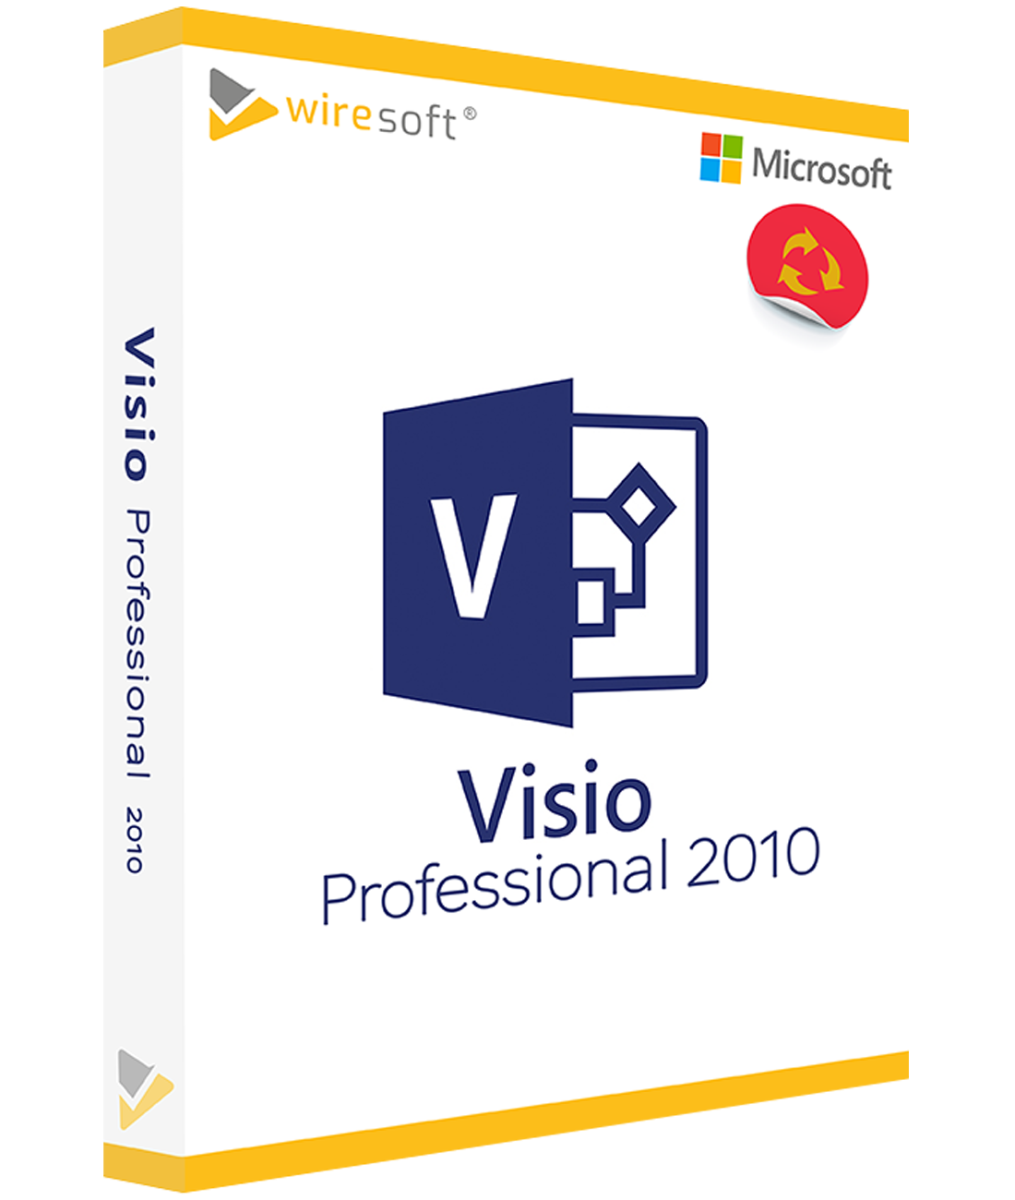 microsoft visio professional 2007